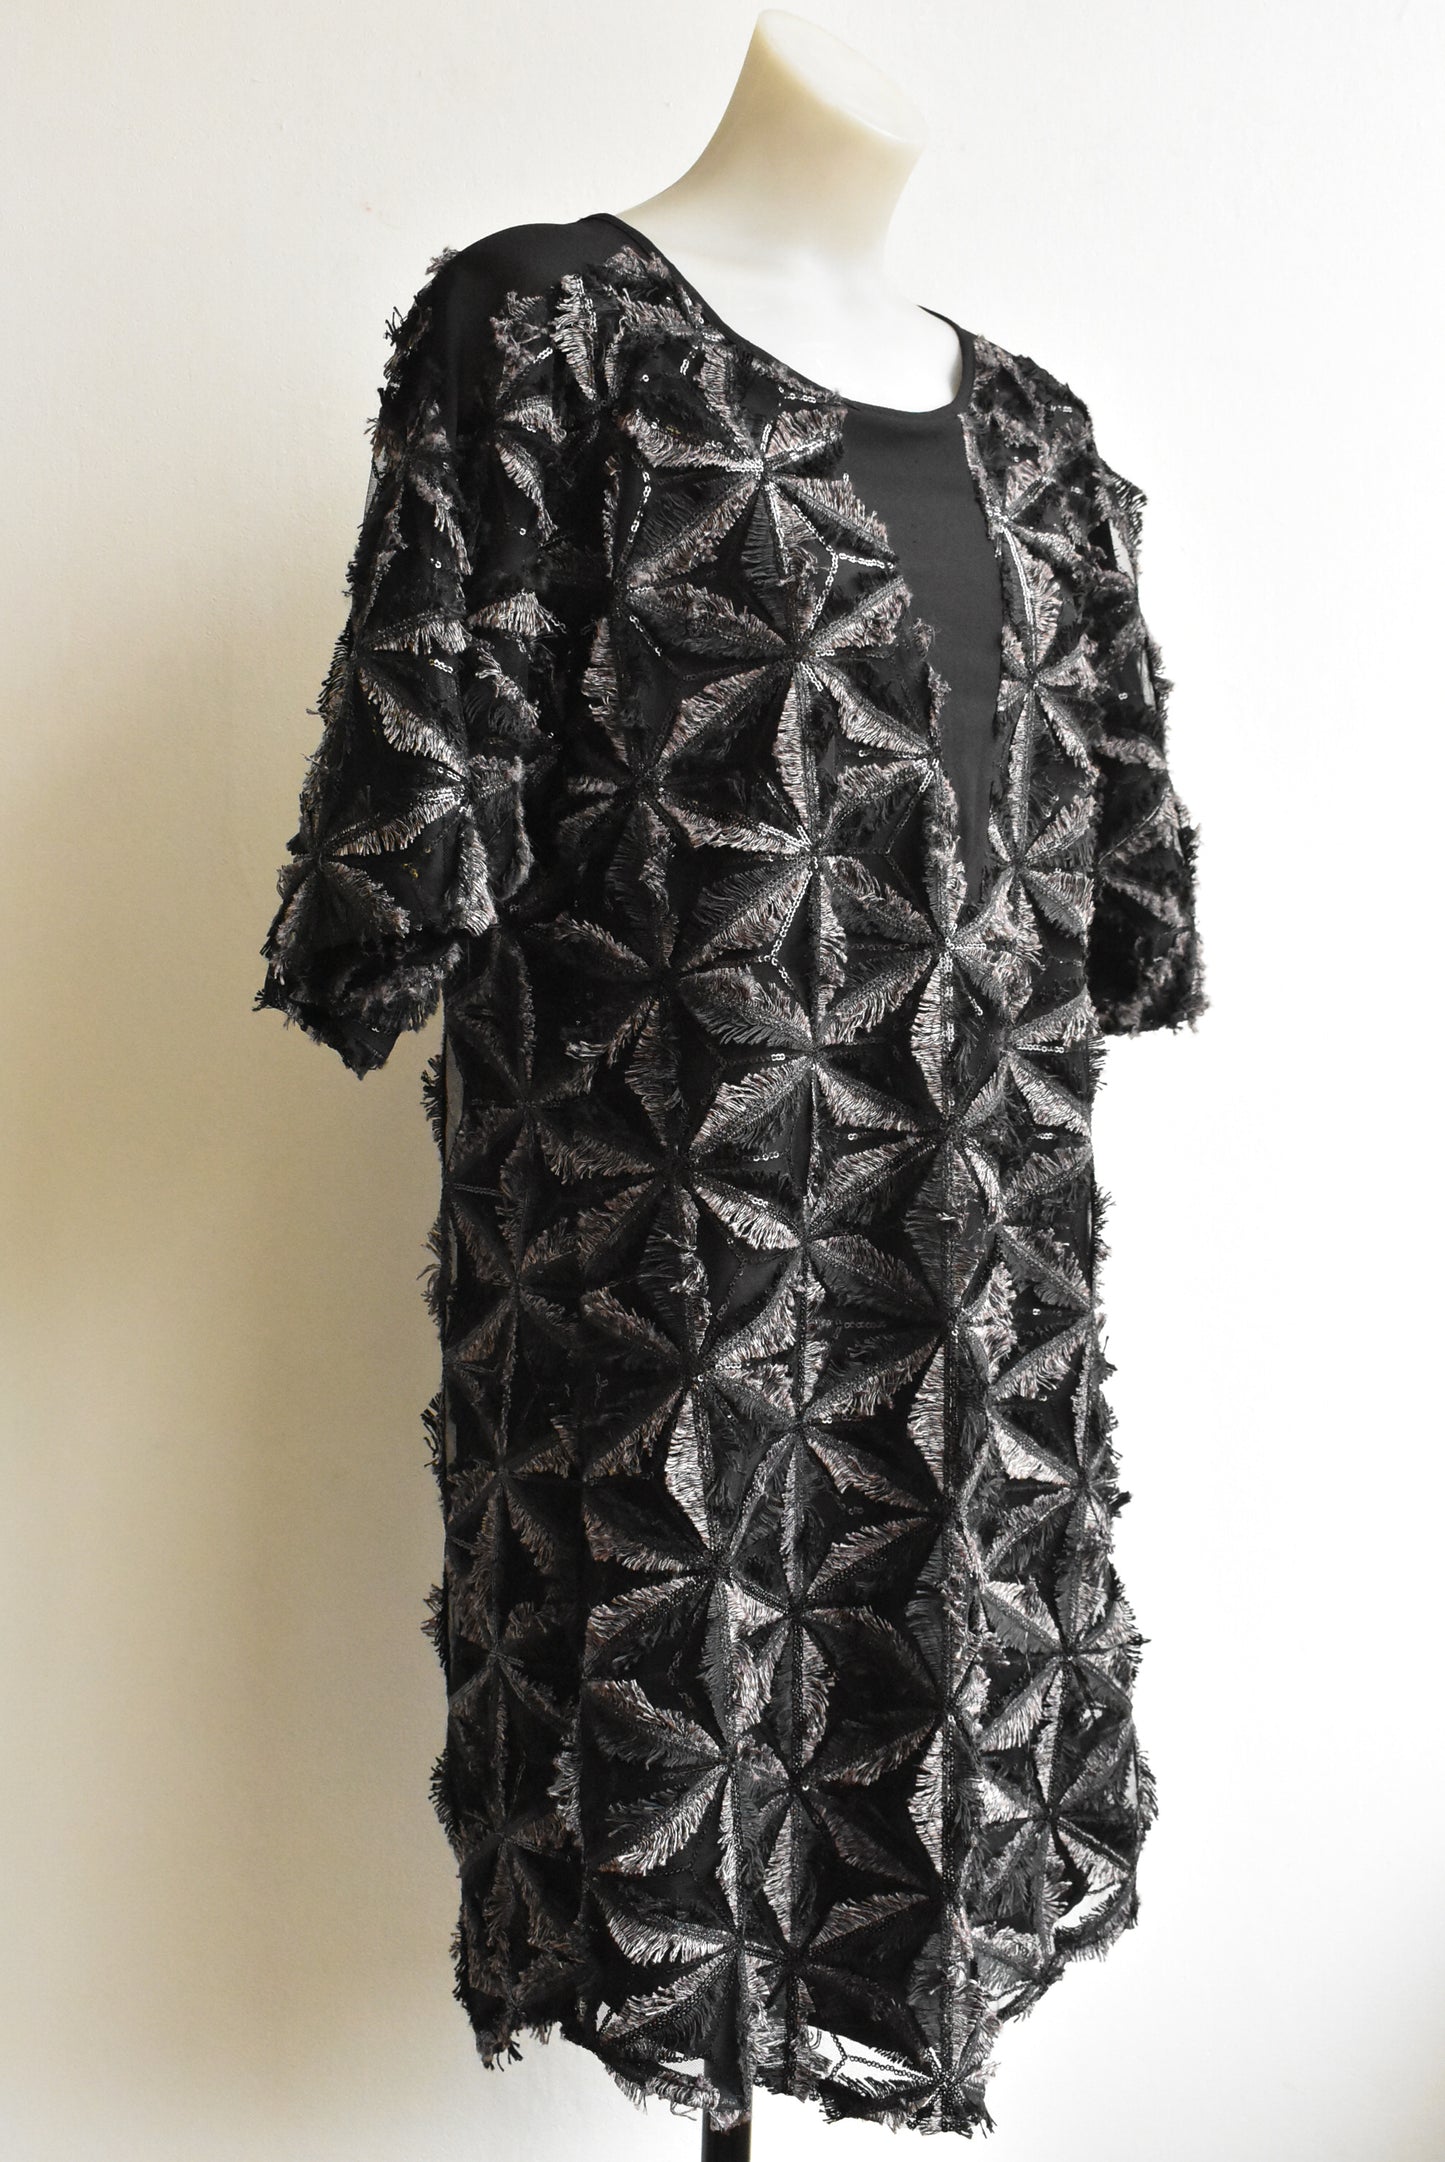 Augustine textured black dress, L